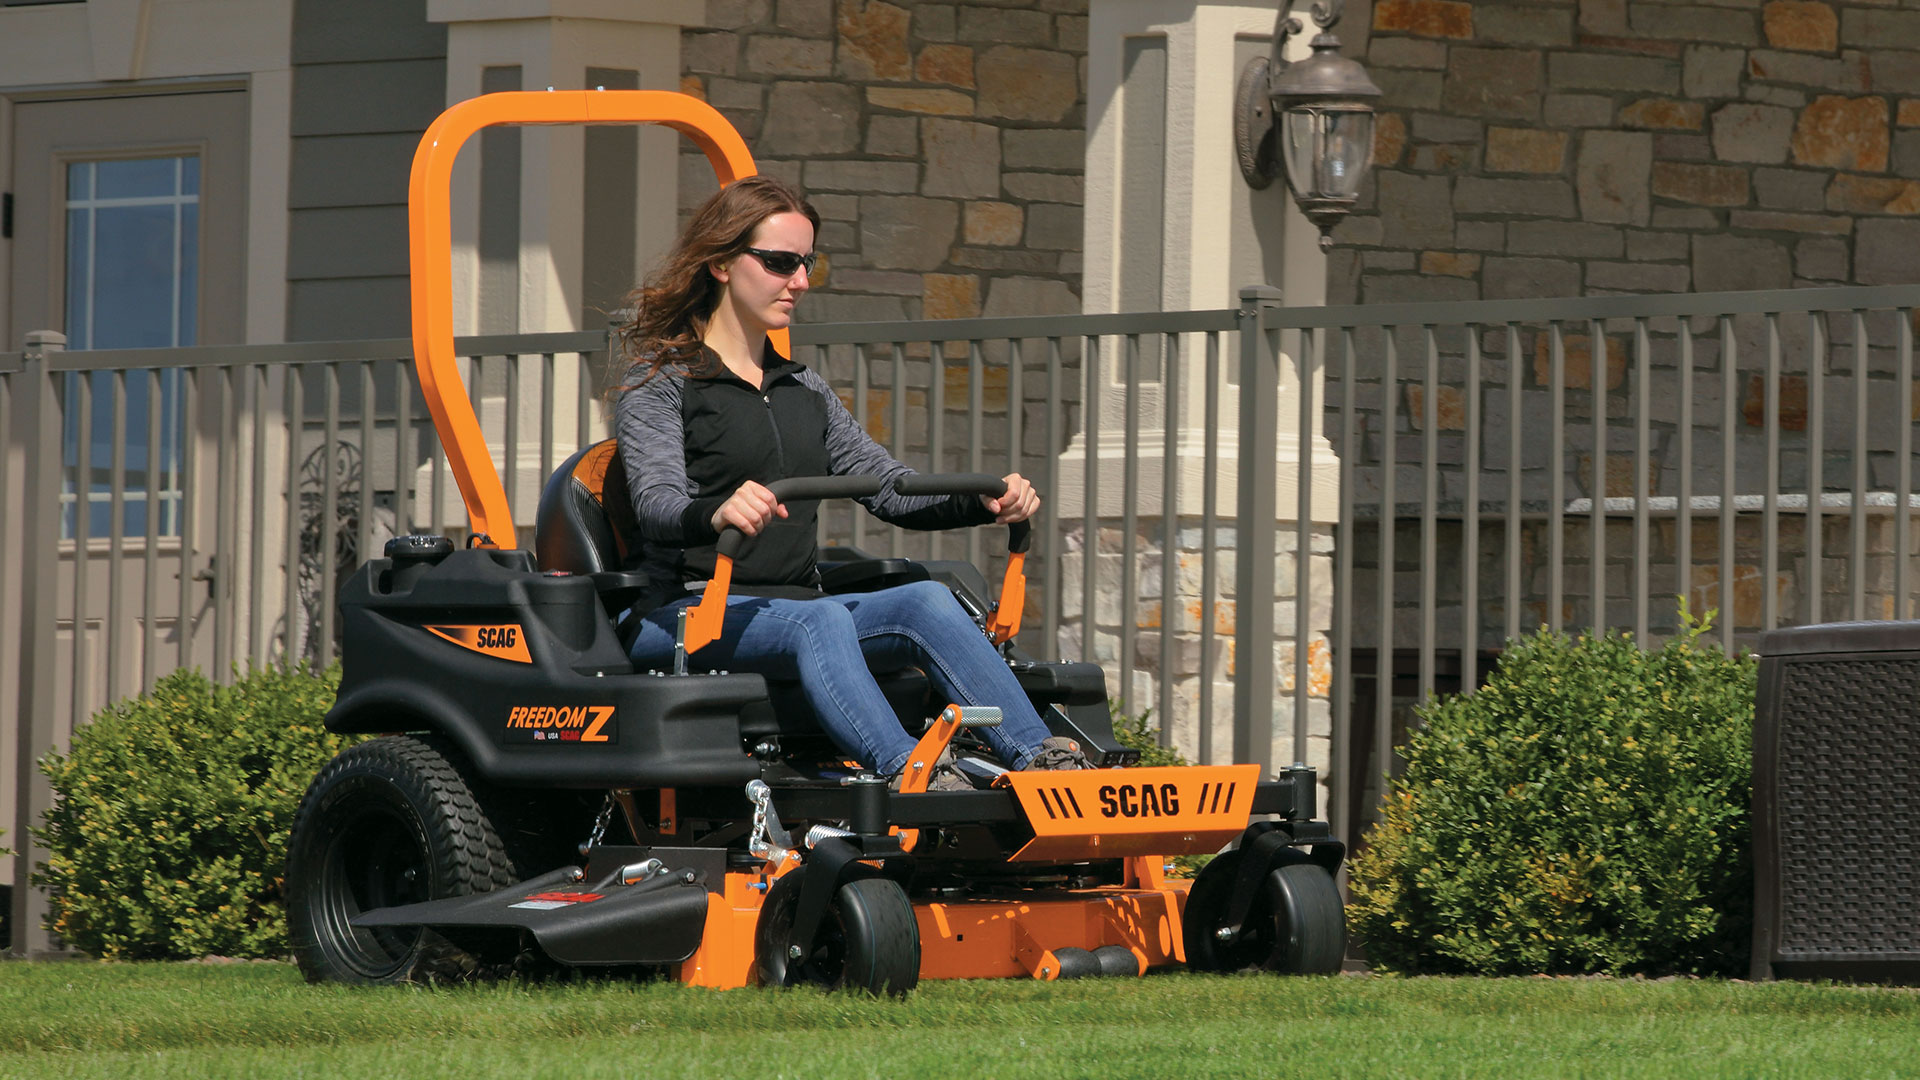 Freedom Z® Zero-Turn Riding Lawn Mower, Products